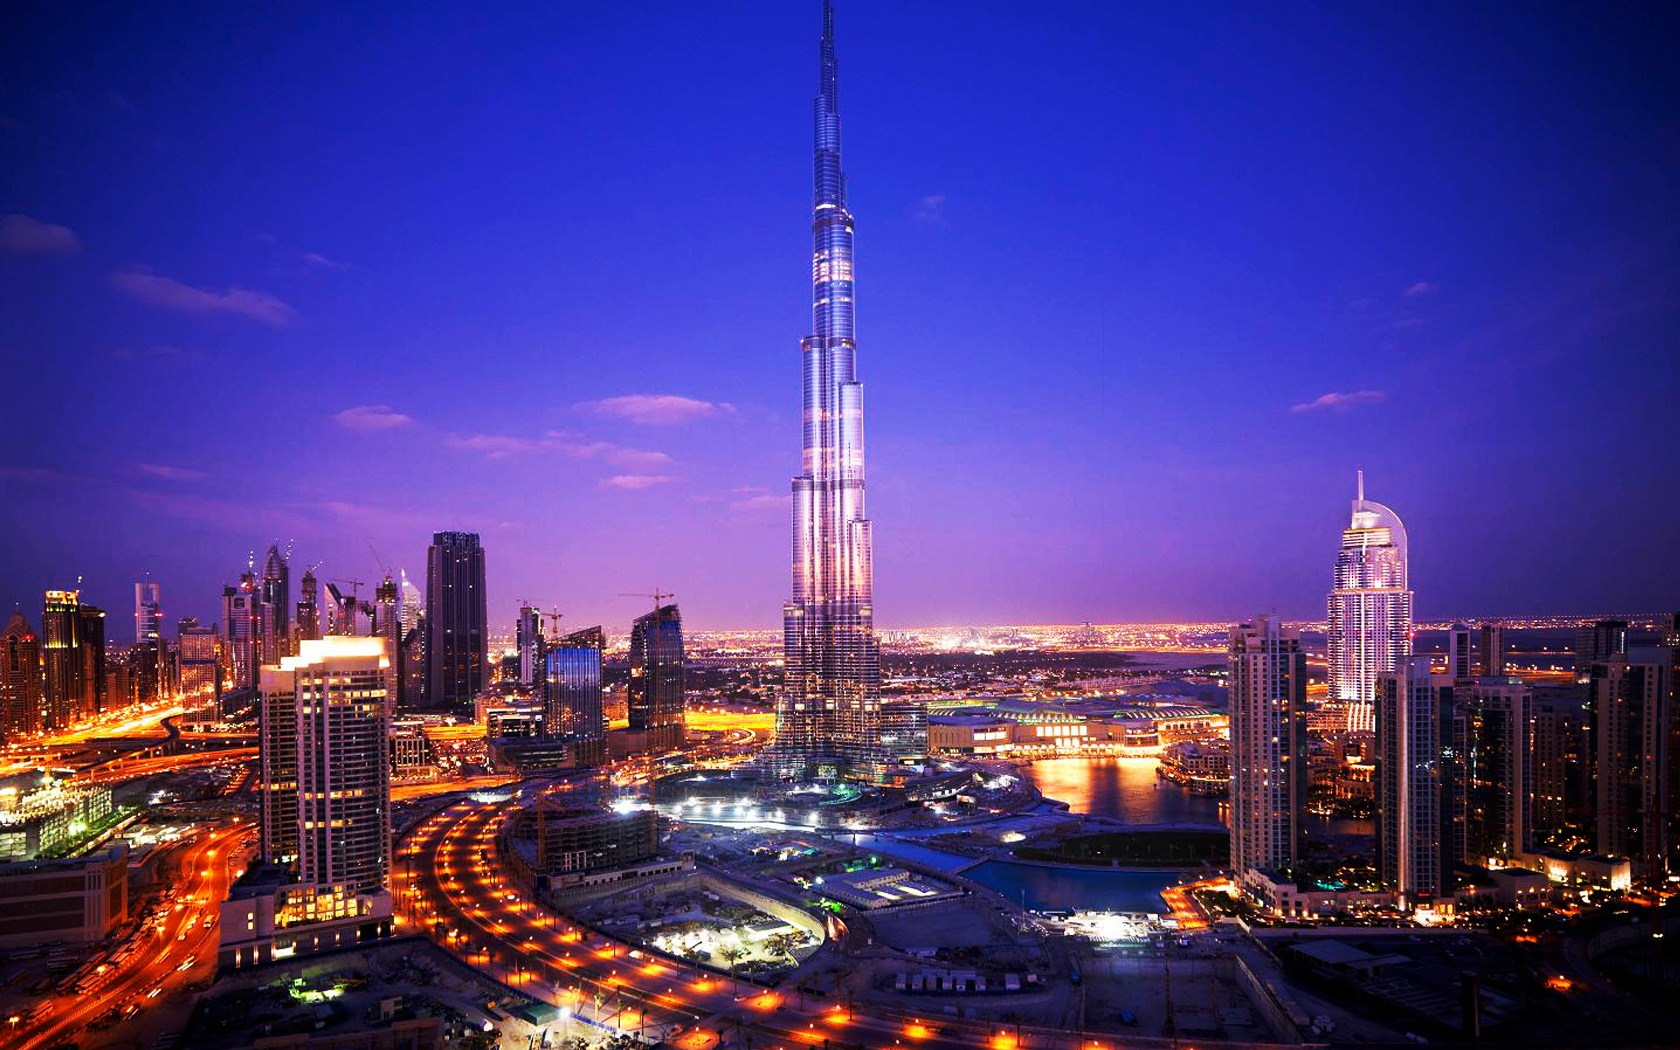 HD wallpaper: World's tallest building, Burj Khalifa, Dubai | Wallpaper  Flare